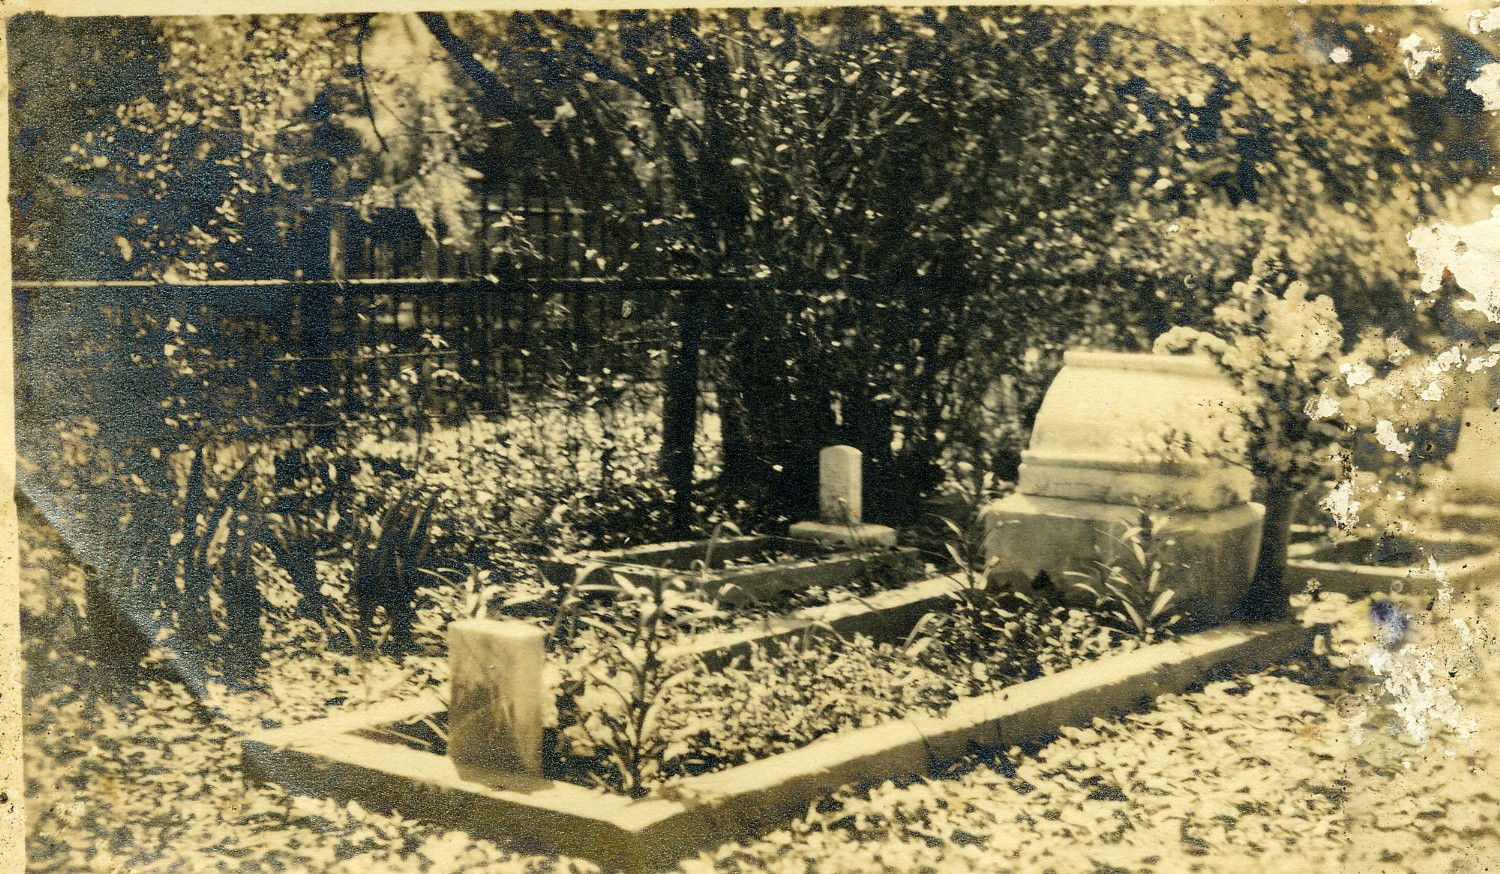 4-3 Ingraham's grave at Easter - Bert requested.jpg